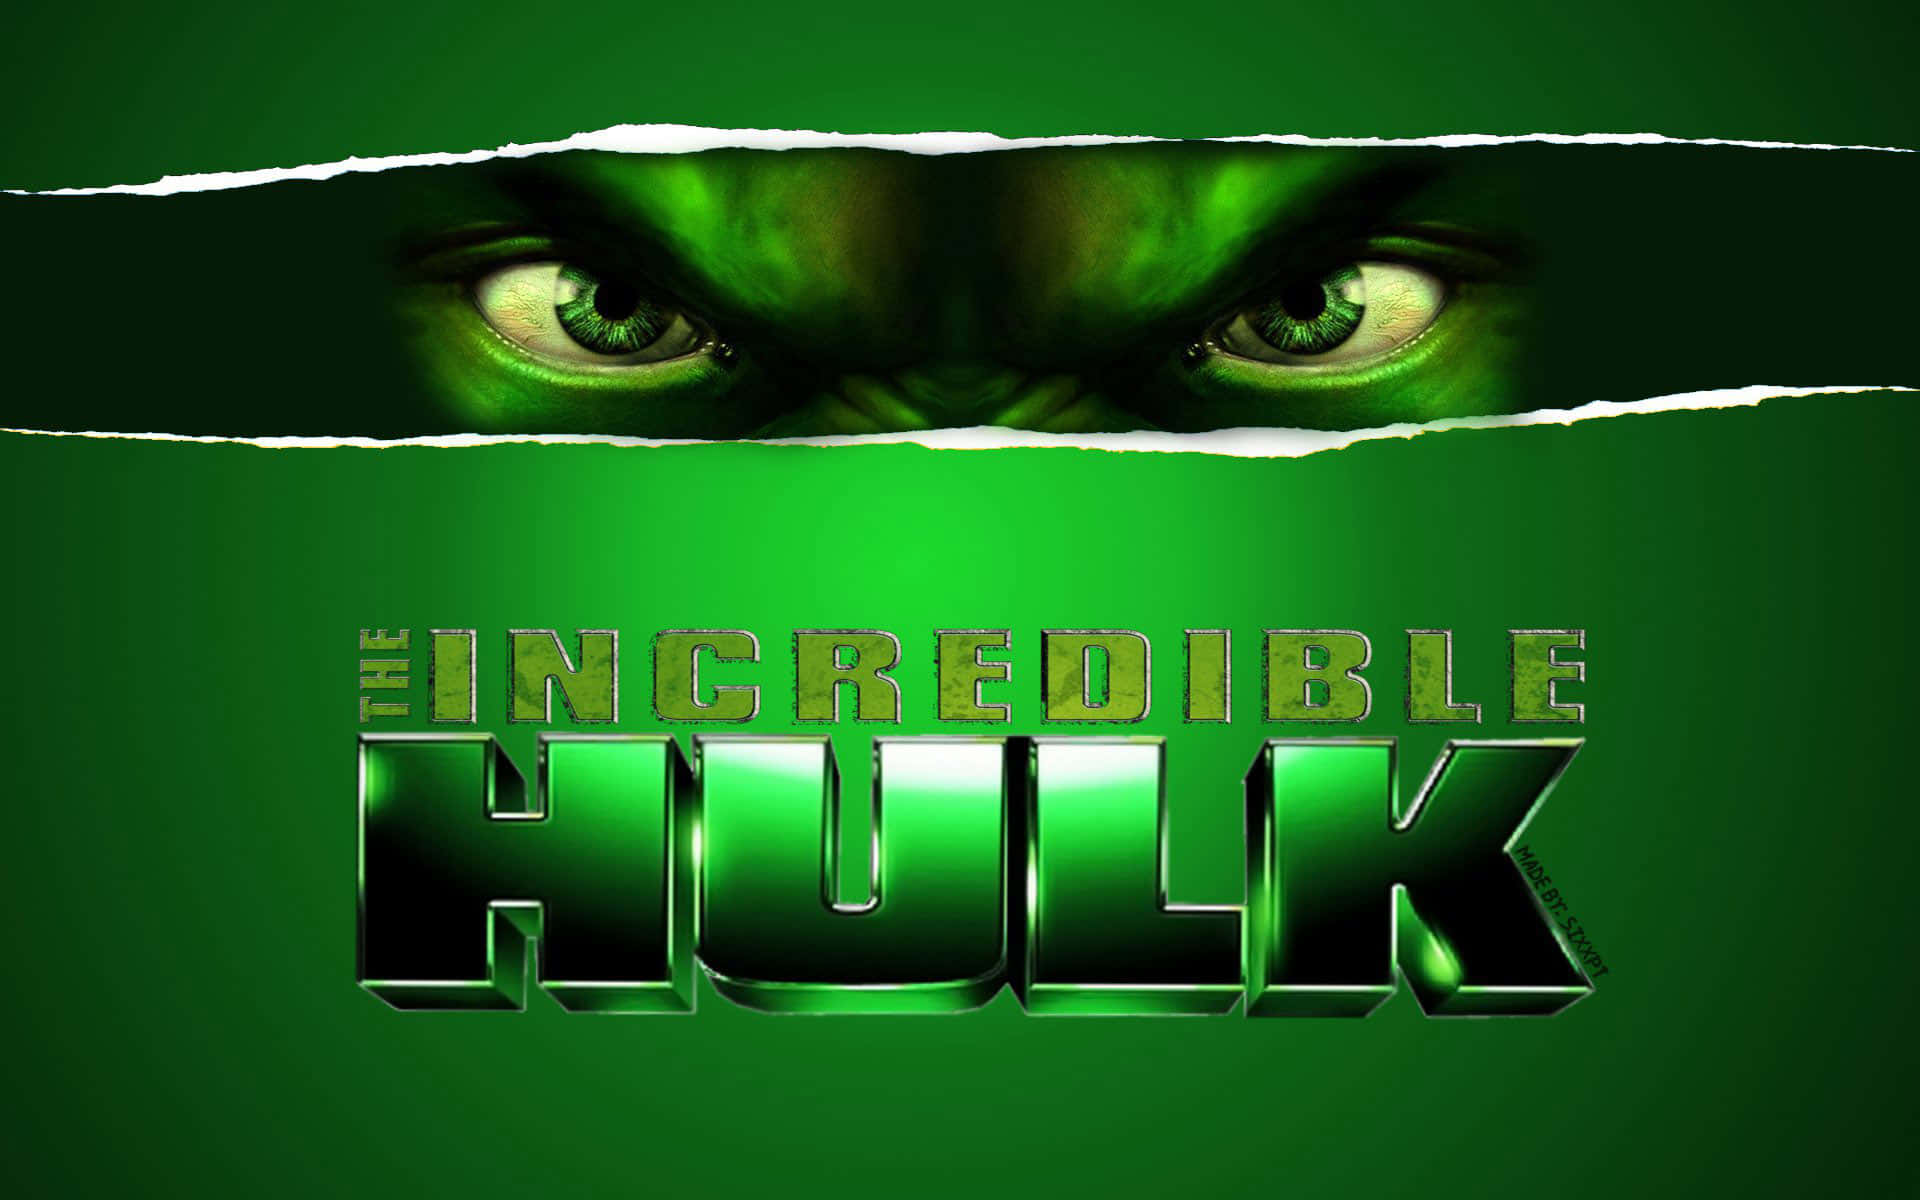 Unleash the Incredible Hulk's Strength